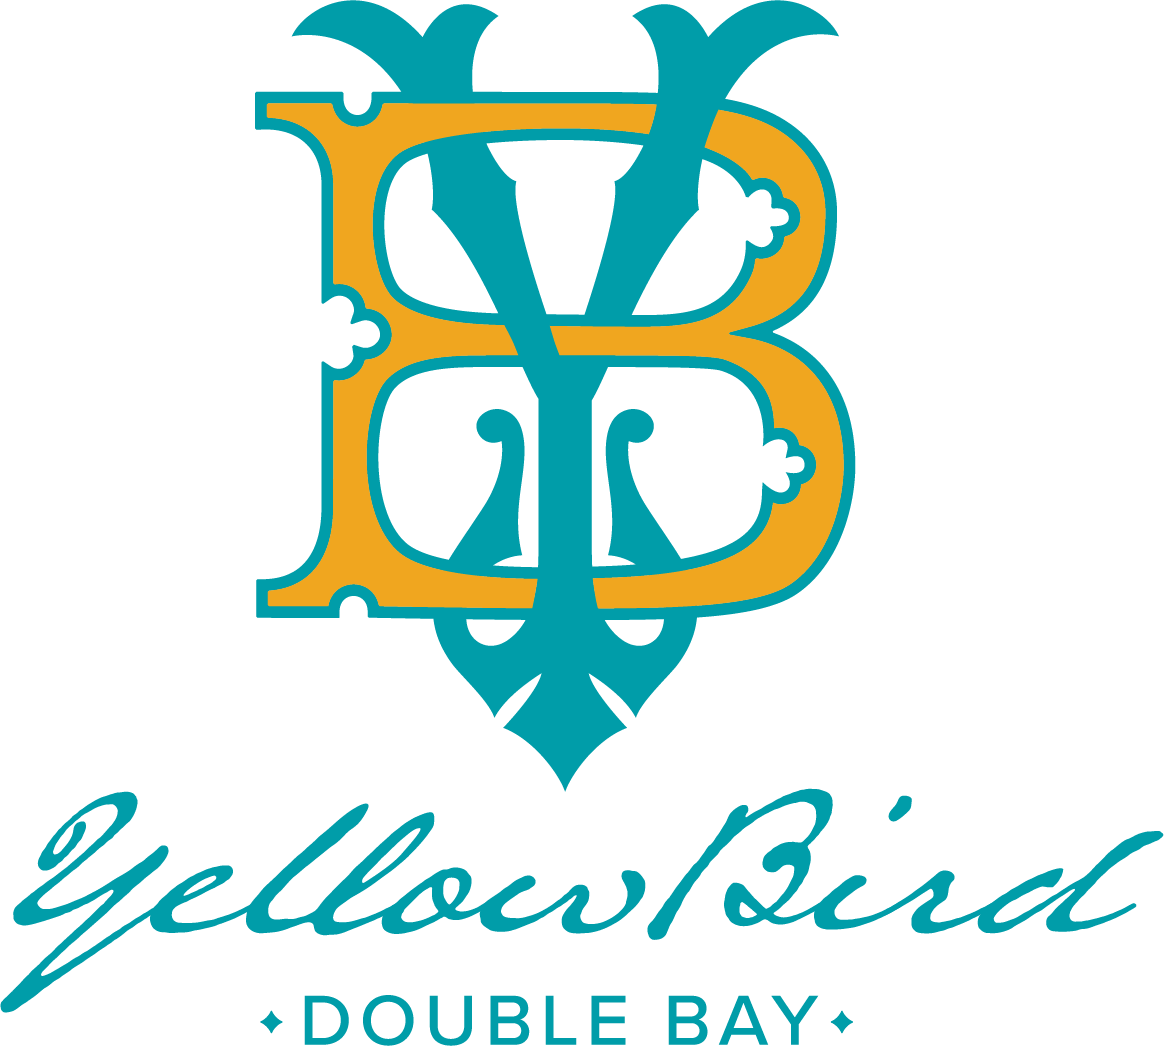 YellowBird at Double Bay